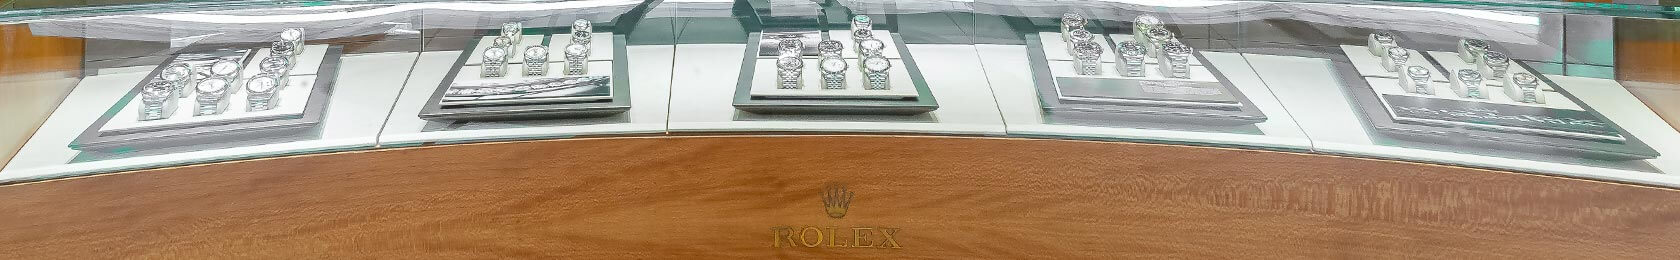 Rolex store image